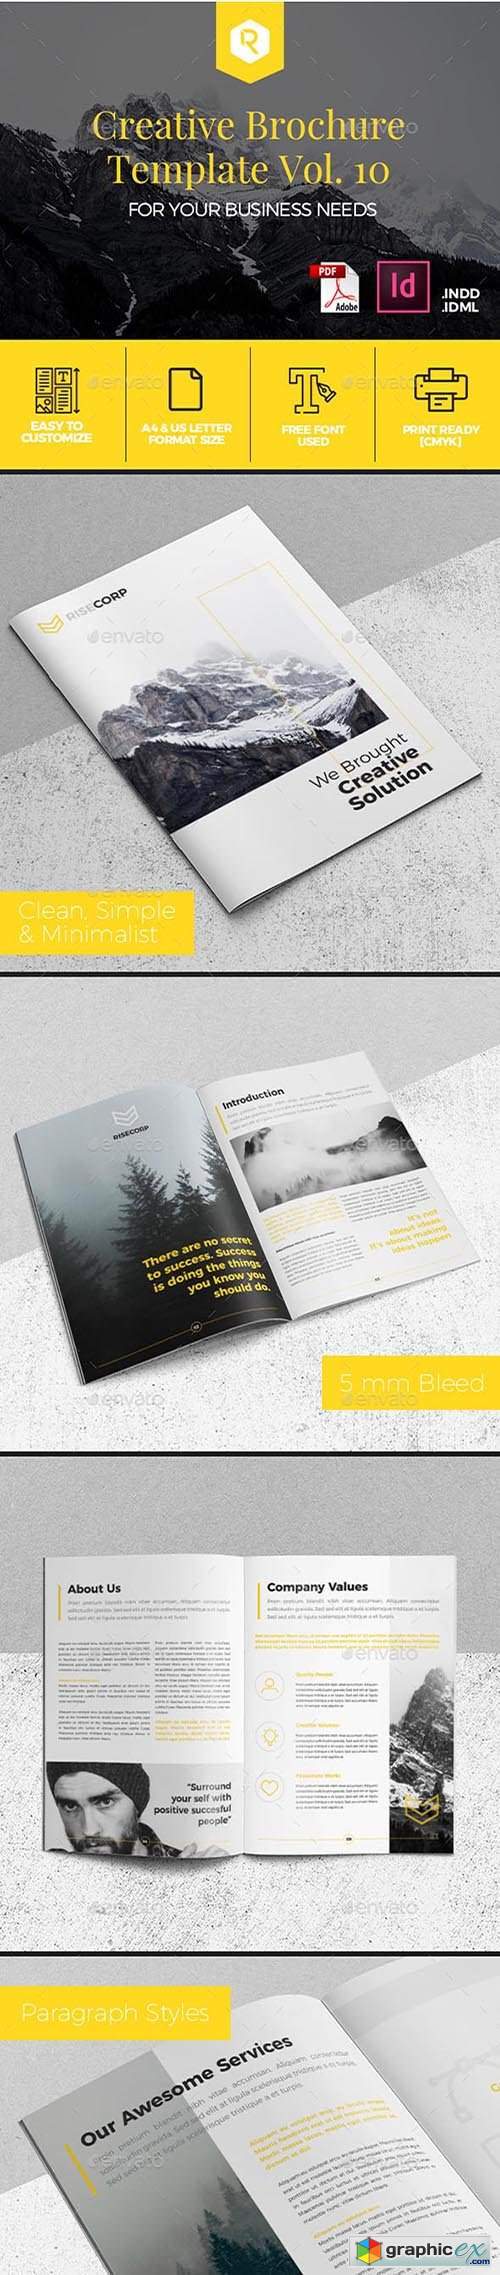 Creative Brochure Template Vol. 10